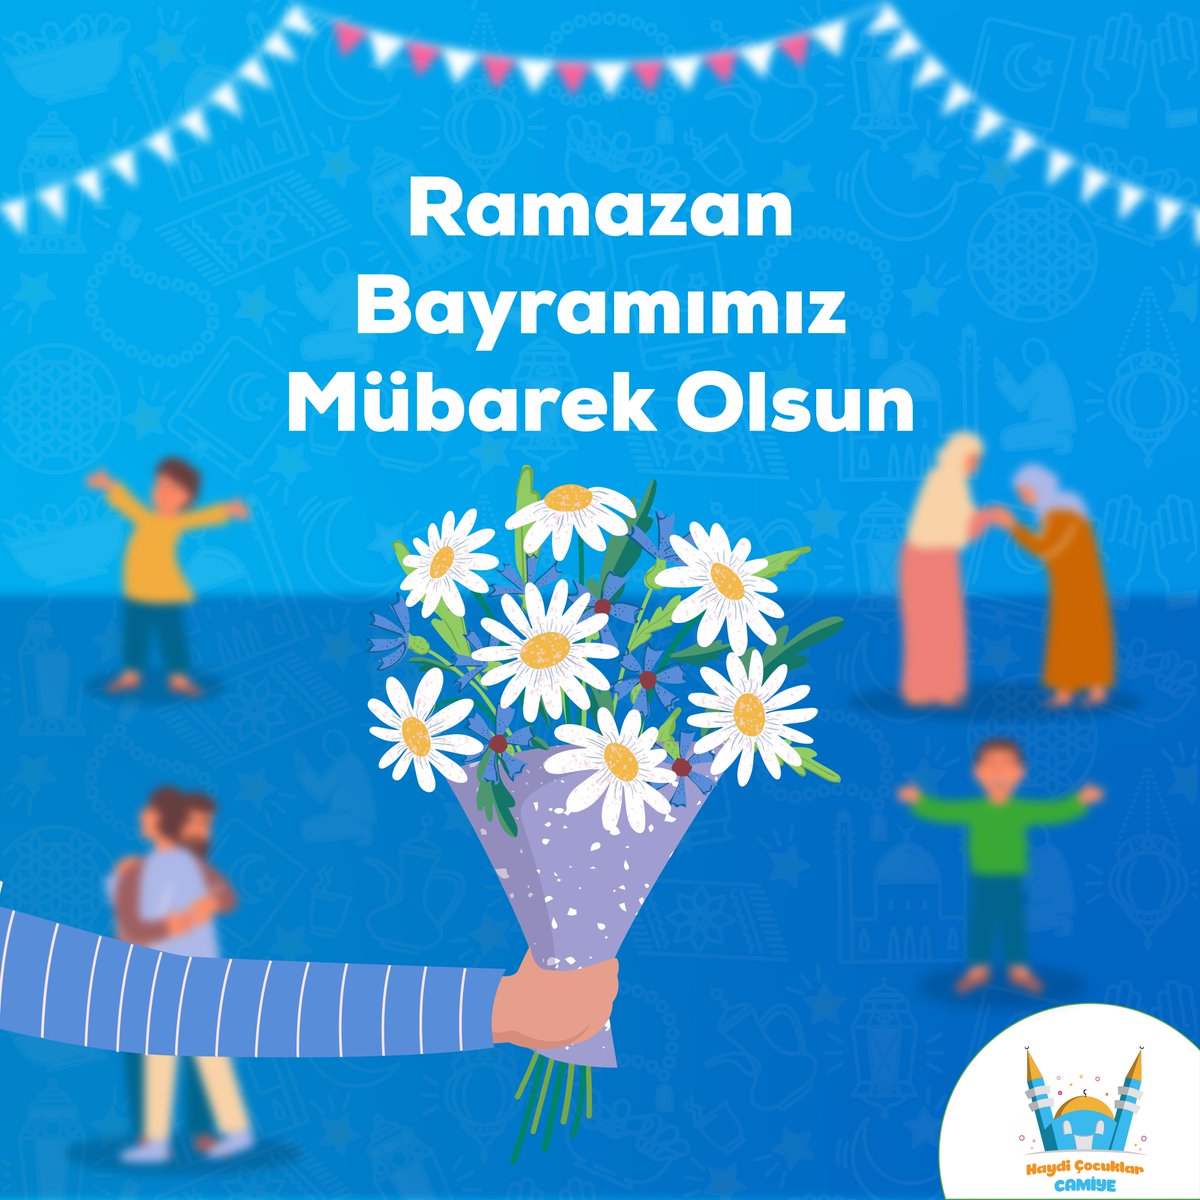 Ramazan Bayramımız Mübarek Olsun 🌹🌷 #RamazanBayramı #HaydiÇocuklarCamiye #Ramazan #ŞevvalAyı